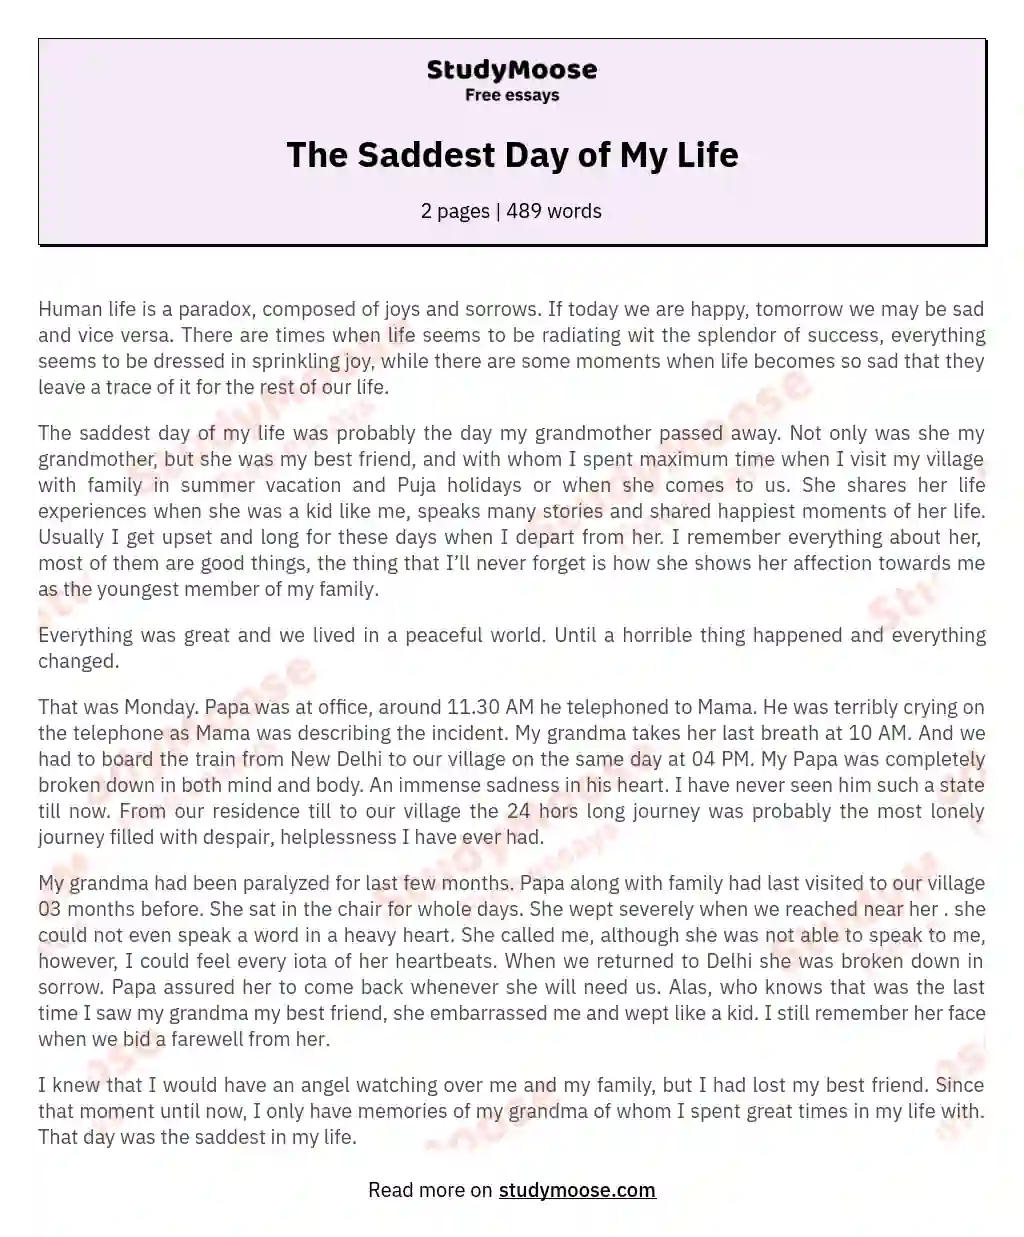 The Saddest Day of My Life essay